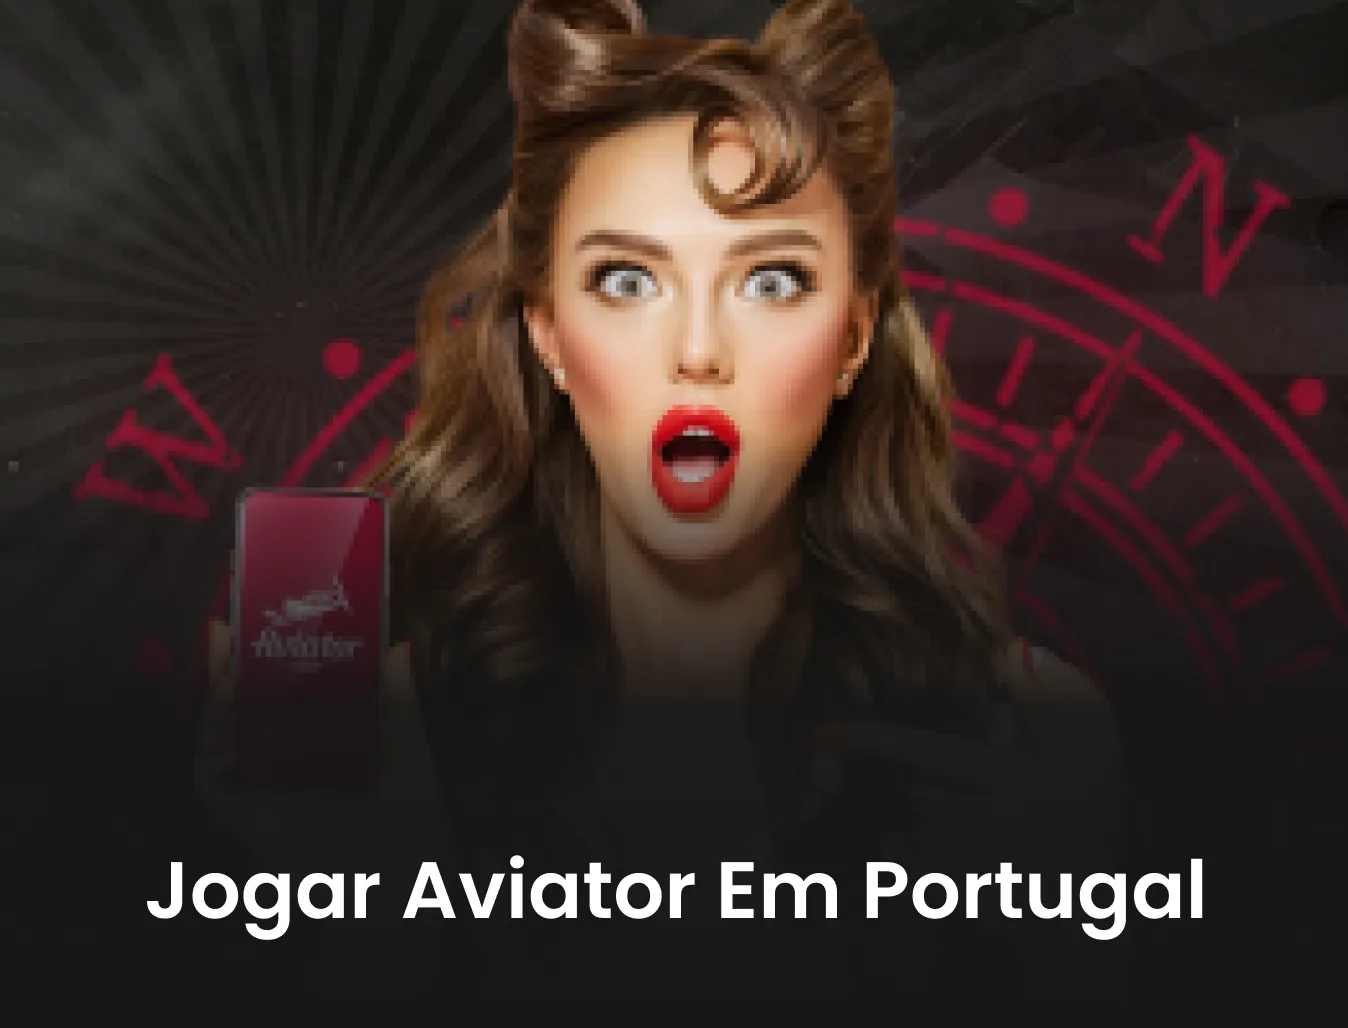 jogo aviator portugal